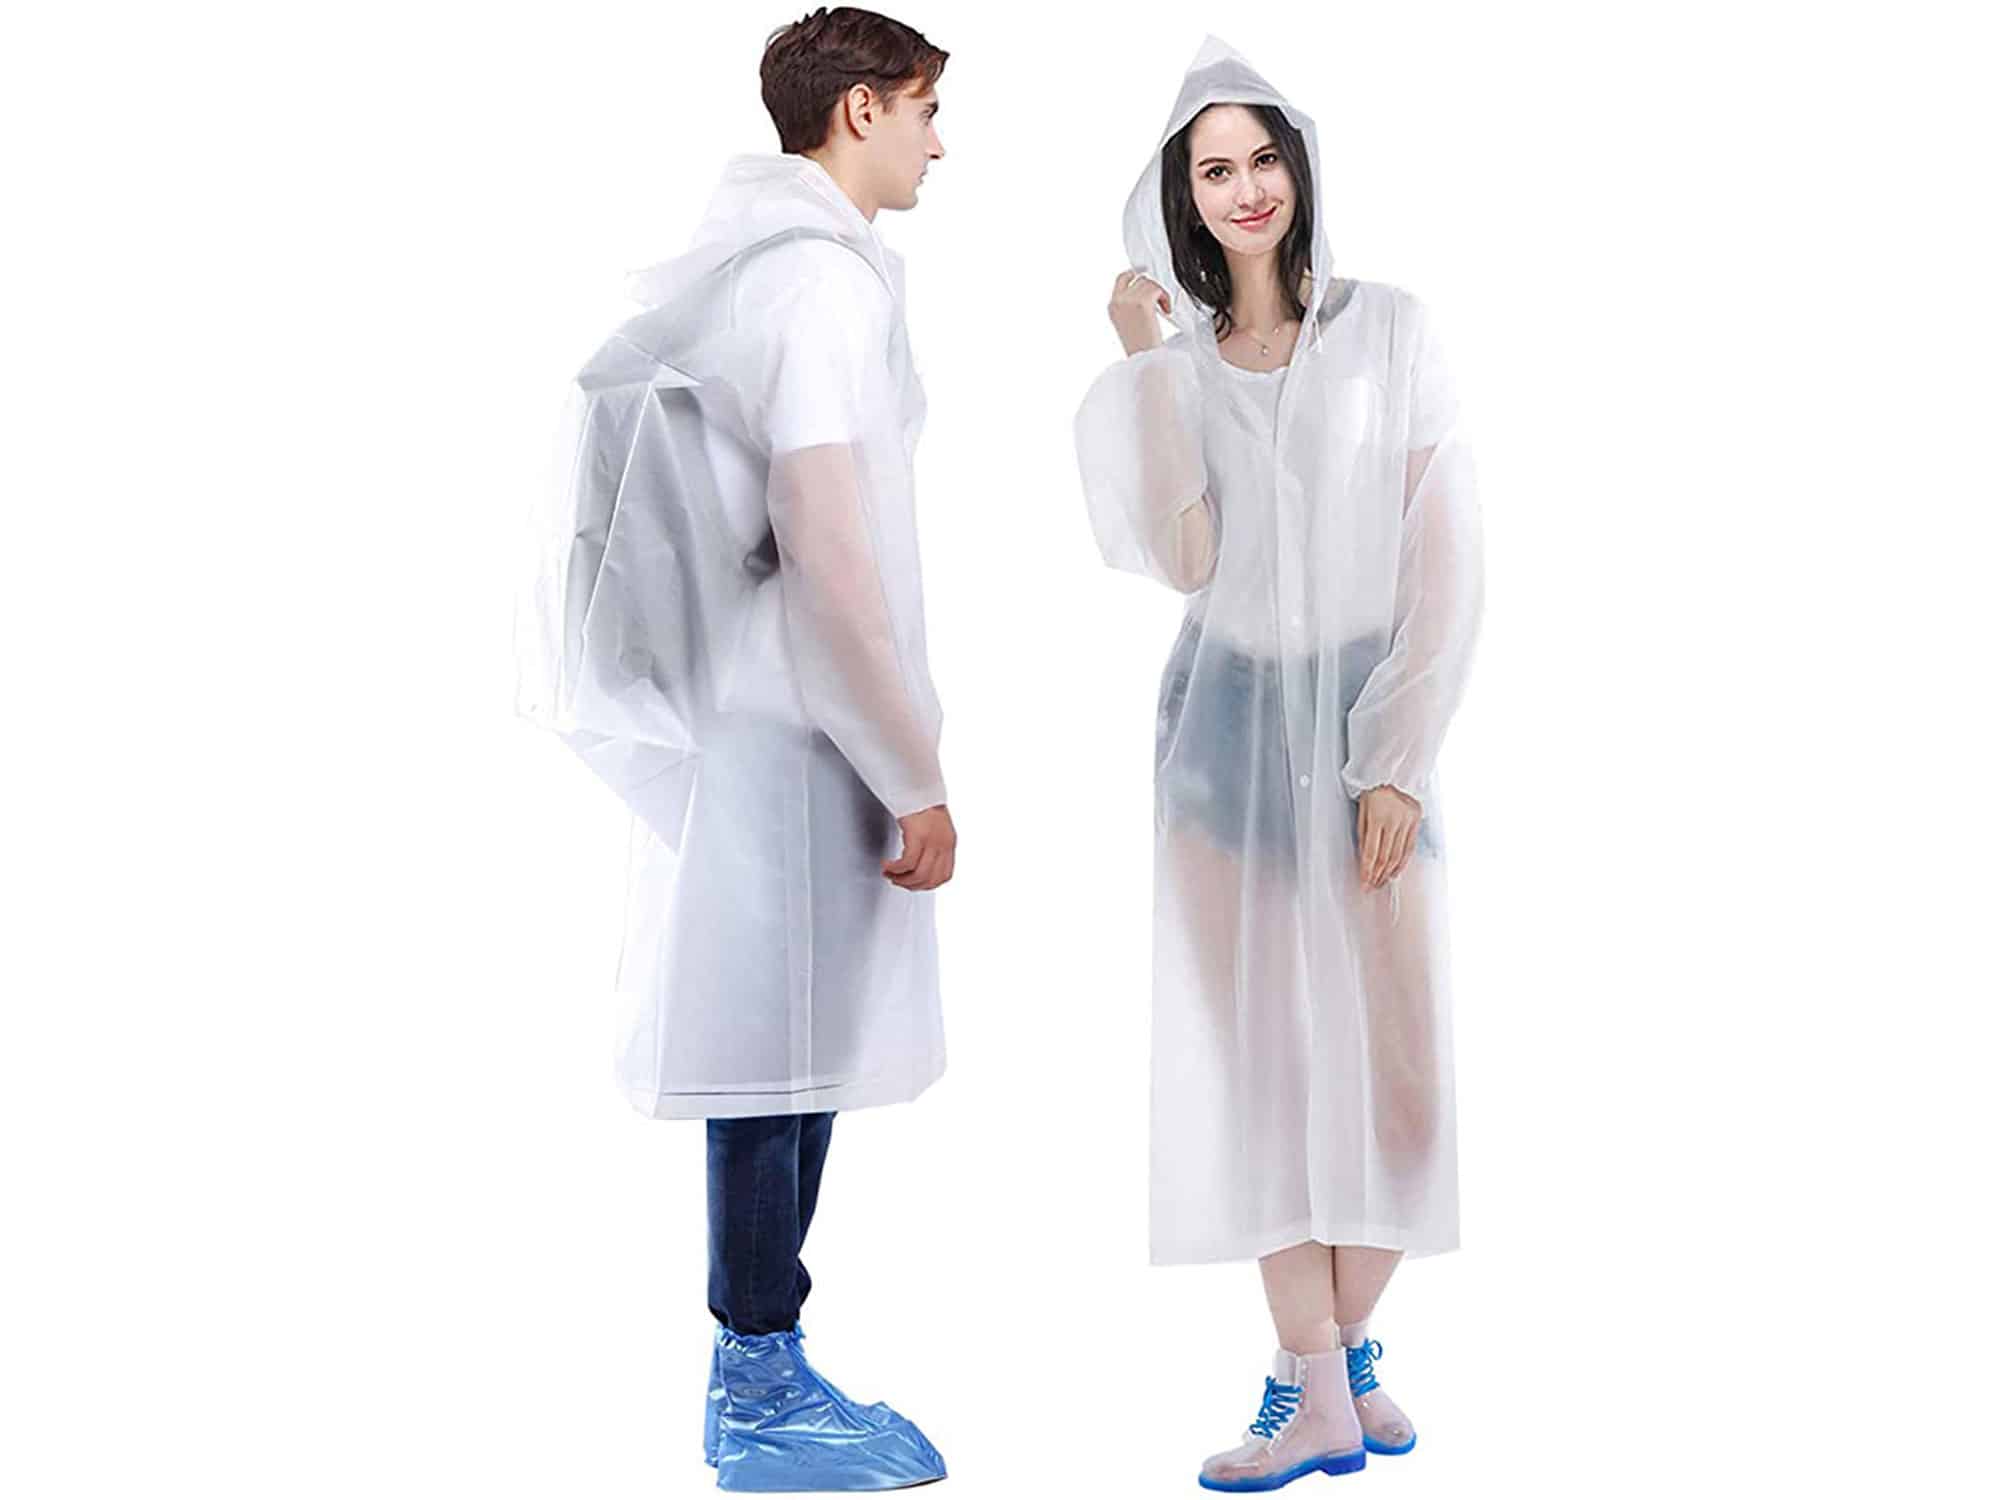 HLKZONE Raincoat, [2 Pack] Portable EVA Rain Coats Reusable Rain Poncho with Hood and Elastic Cuff Sleeves, White